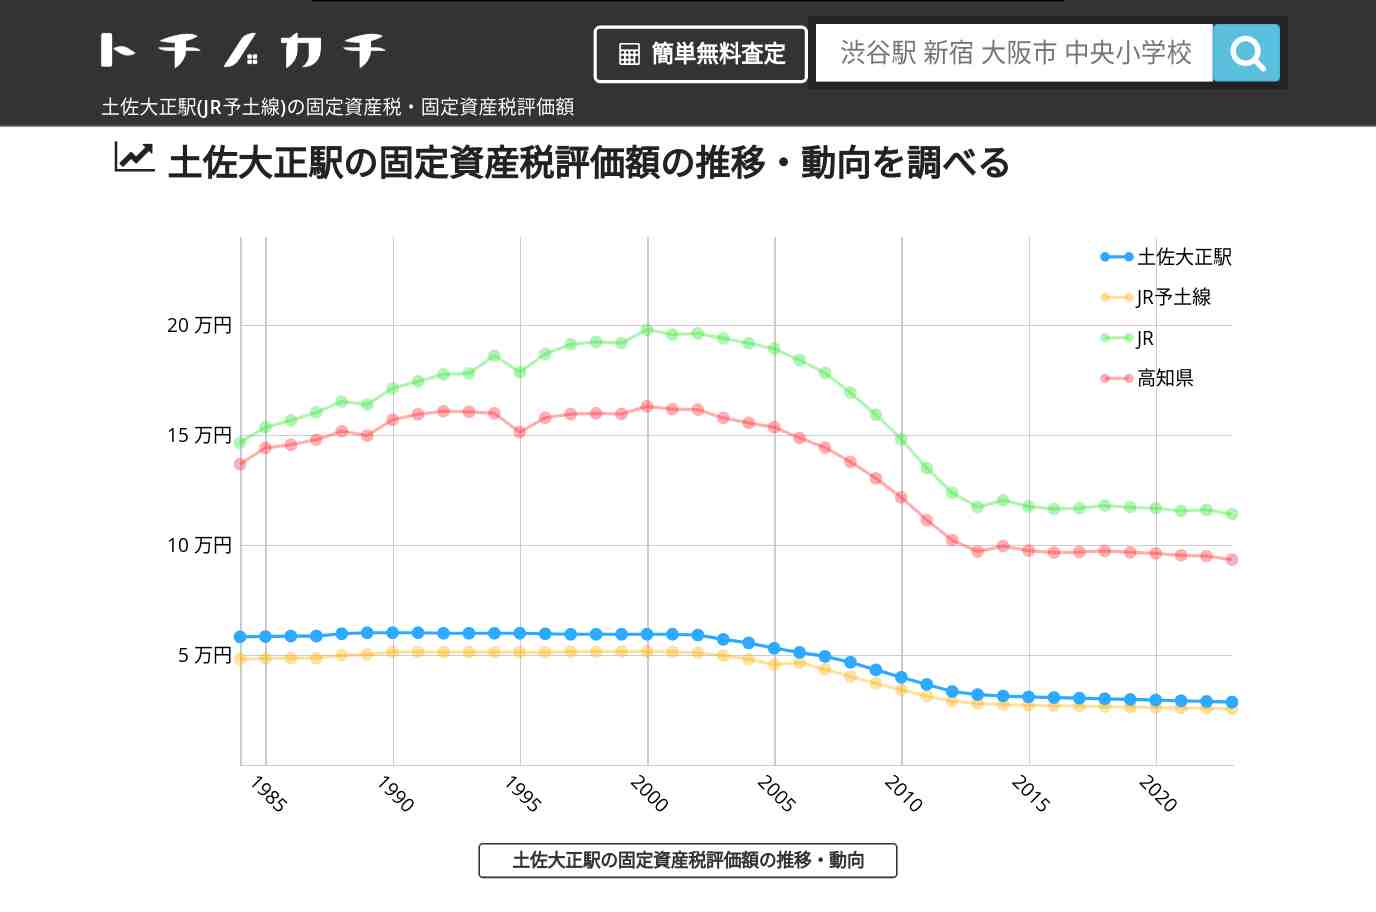 土佐大正駅(JR予土線)の固定資産税・固定資産税評価額 | トチノカチ